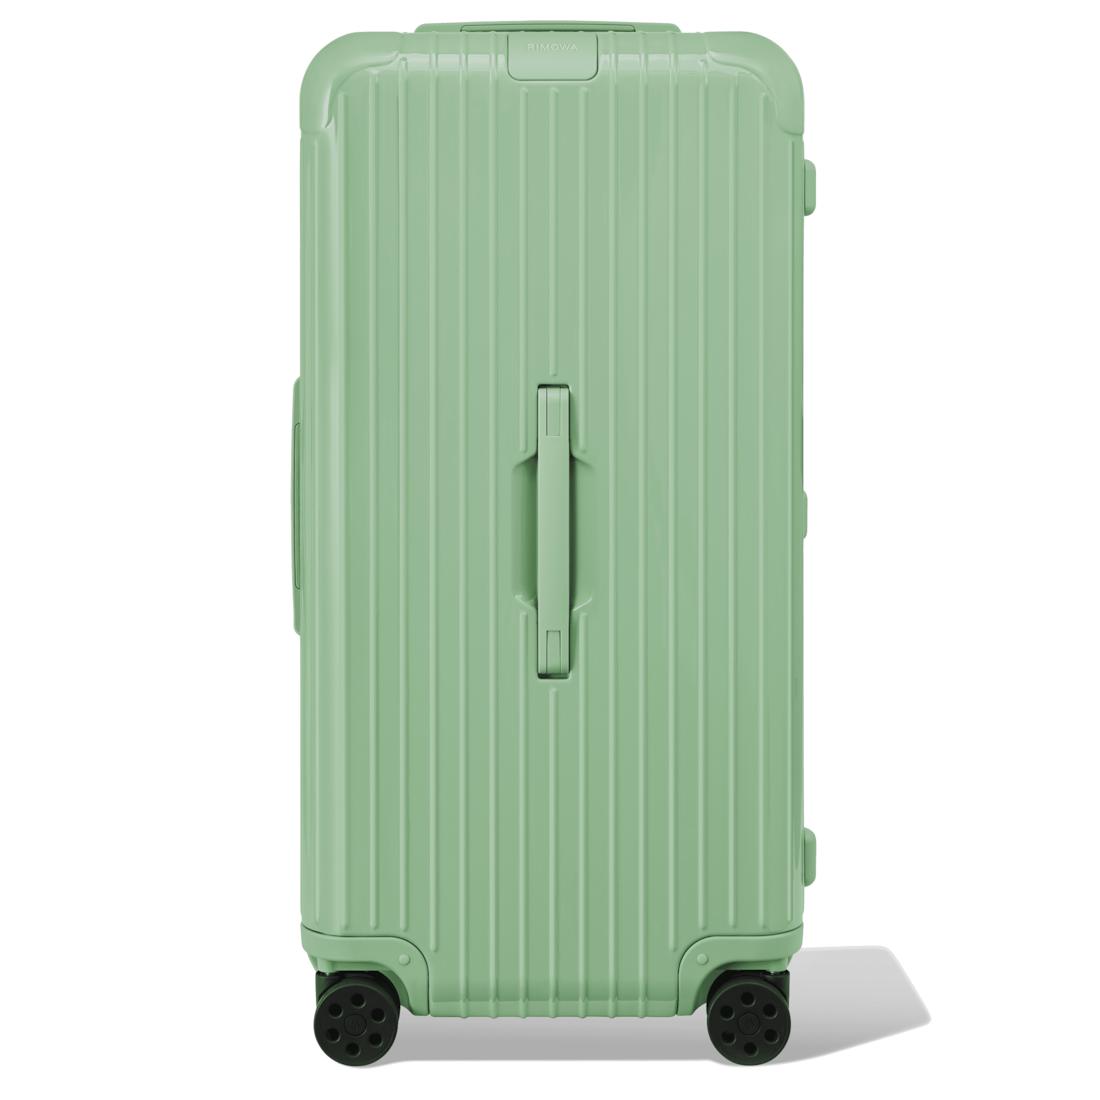 Essential Trunk Plus Large Suitcase, Matte Black